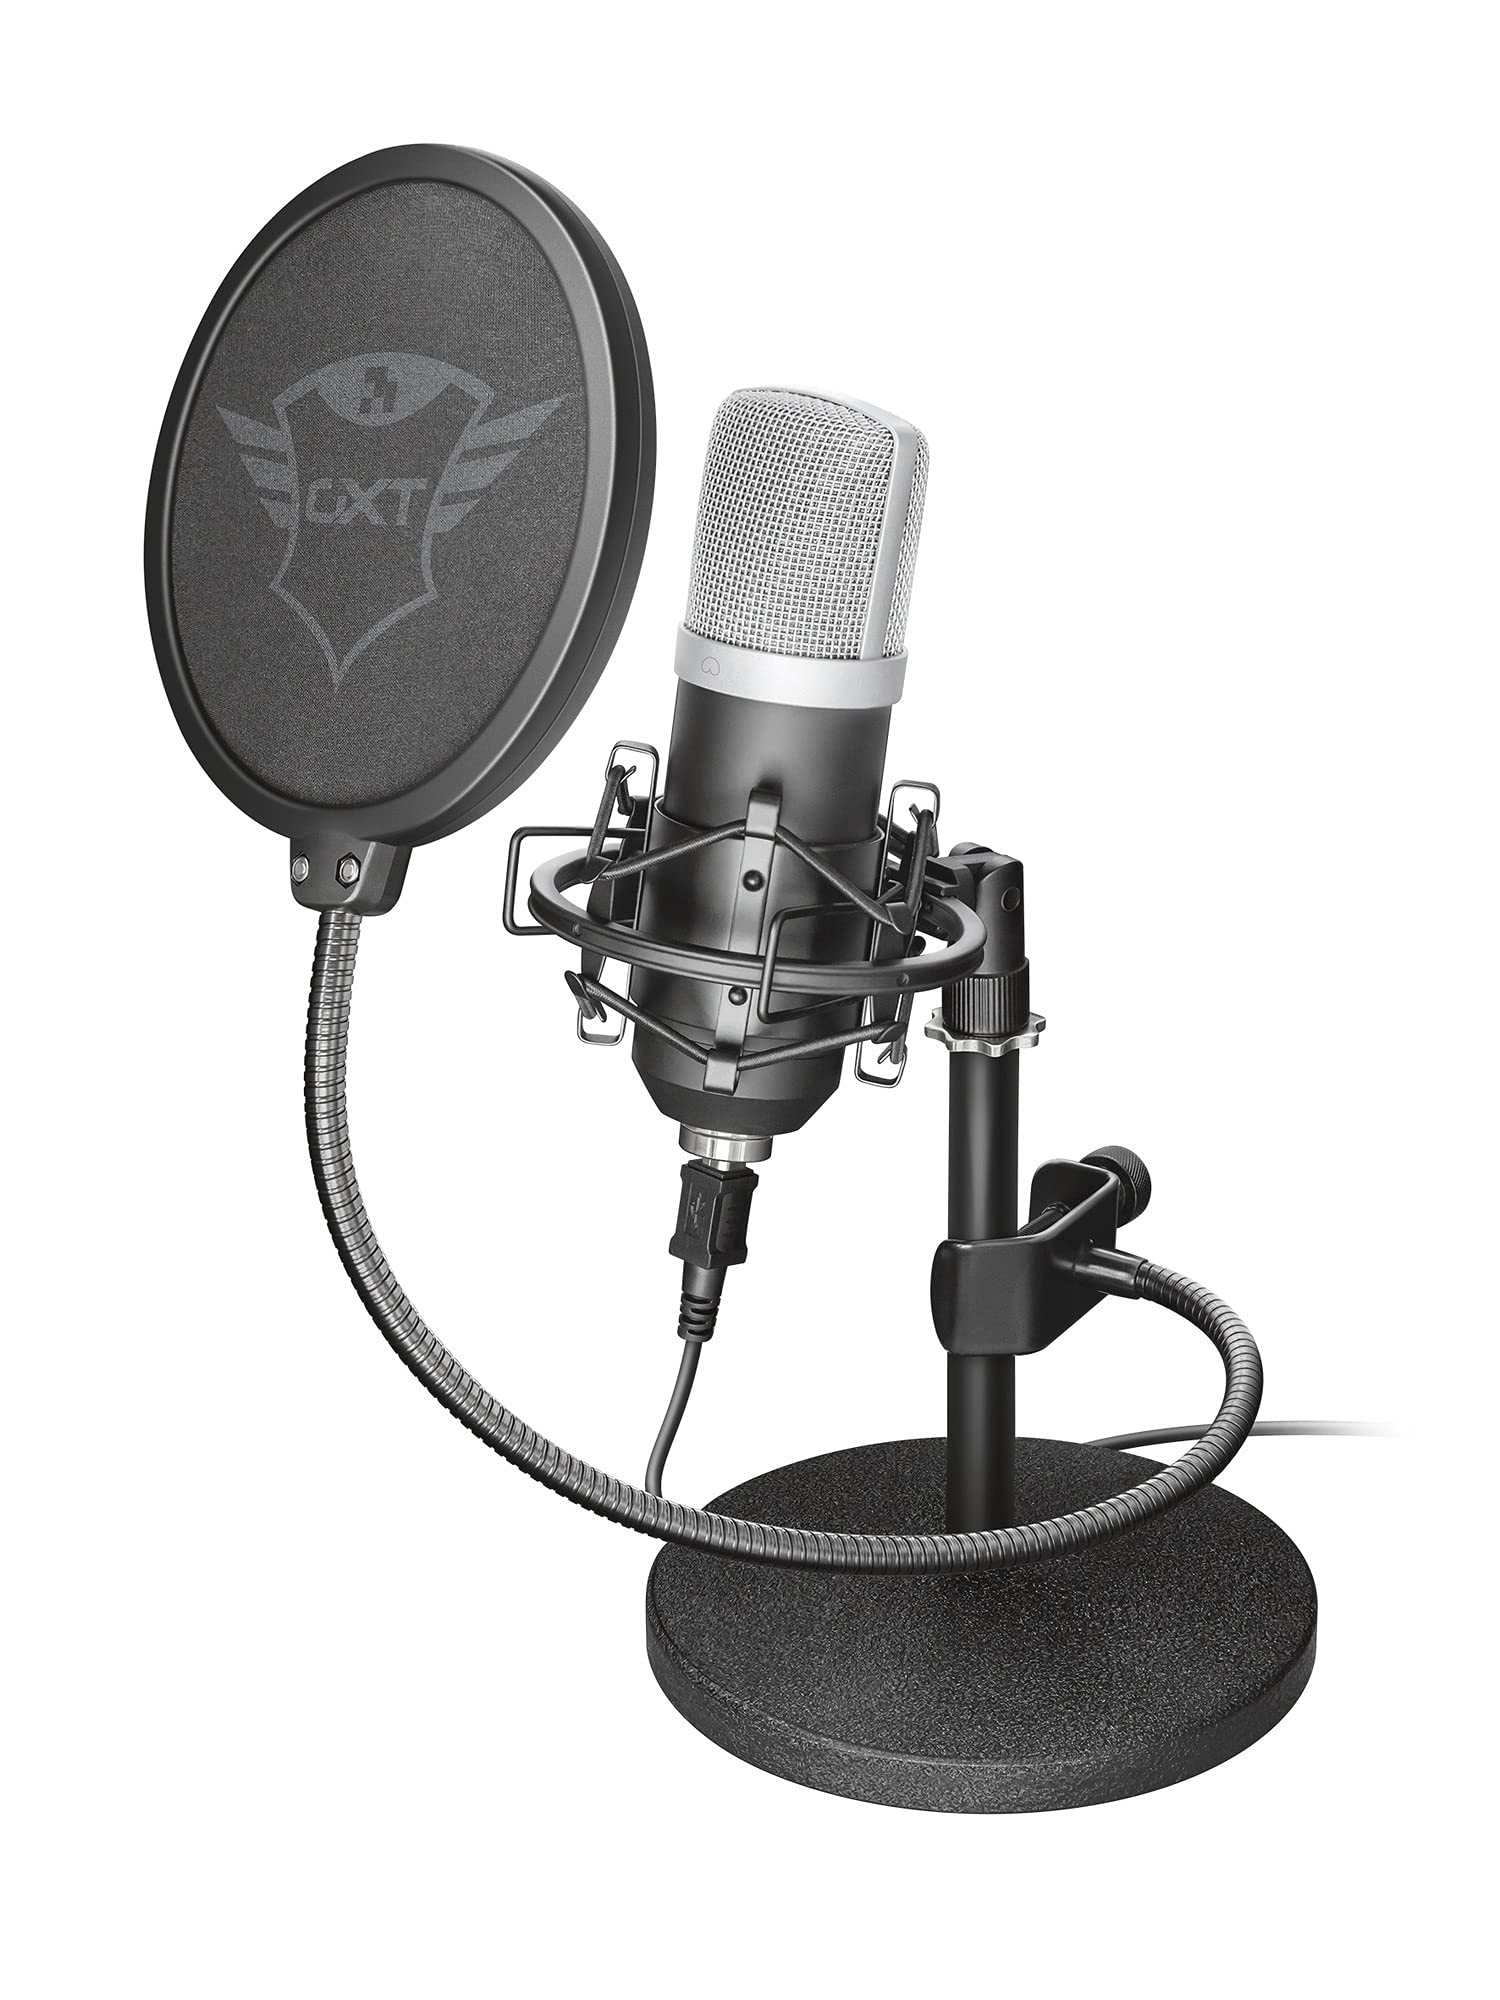 Trust Gaming GXT 252 Emita Studio Mikrofon mit Transportkoffer, Nierencharakteristik, USB Mikrofon für PC, PS4, PS5, Streaming, Podcasting, Musikaufnahmen, ASMR, YouTube, Twitch - Schwarz